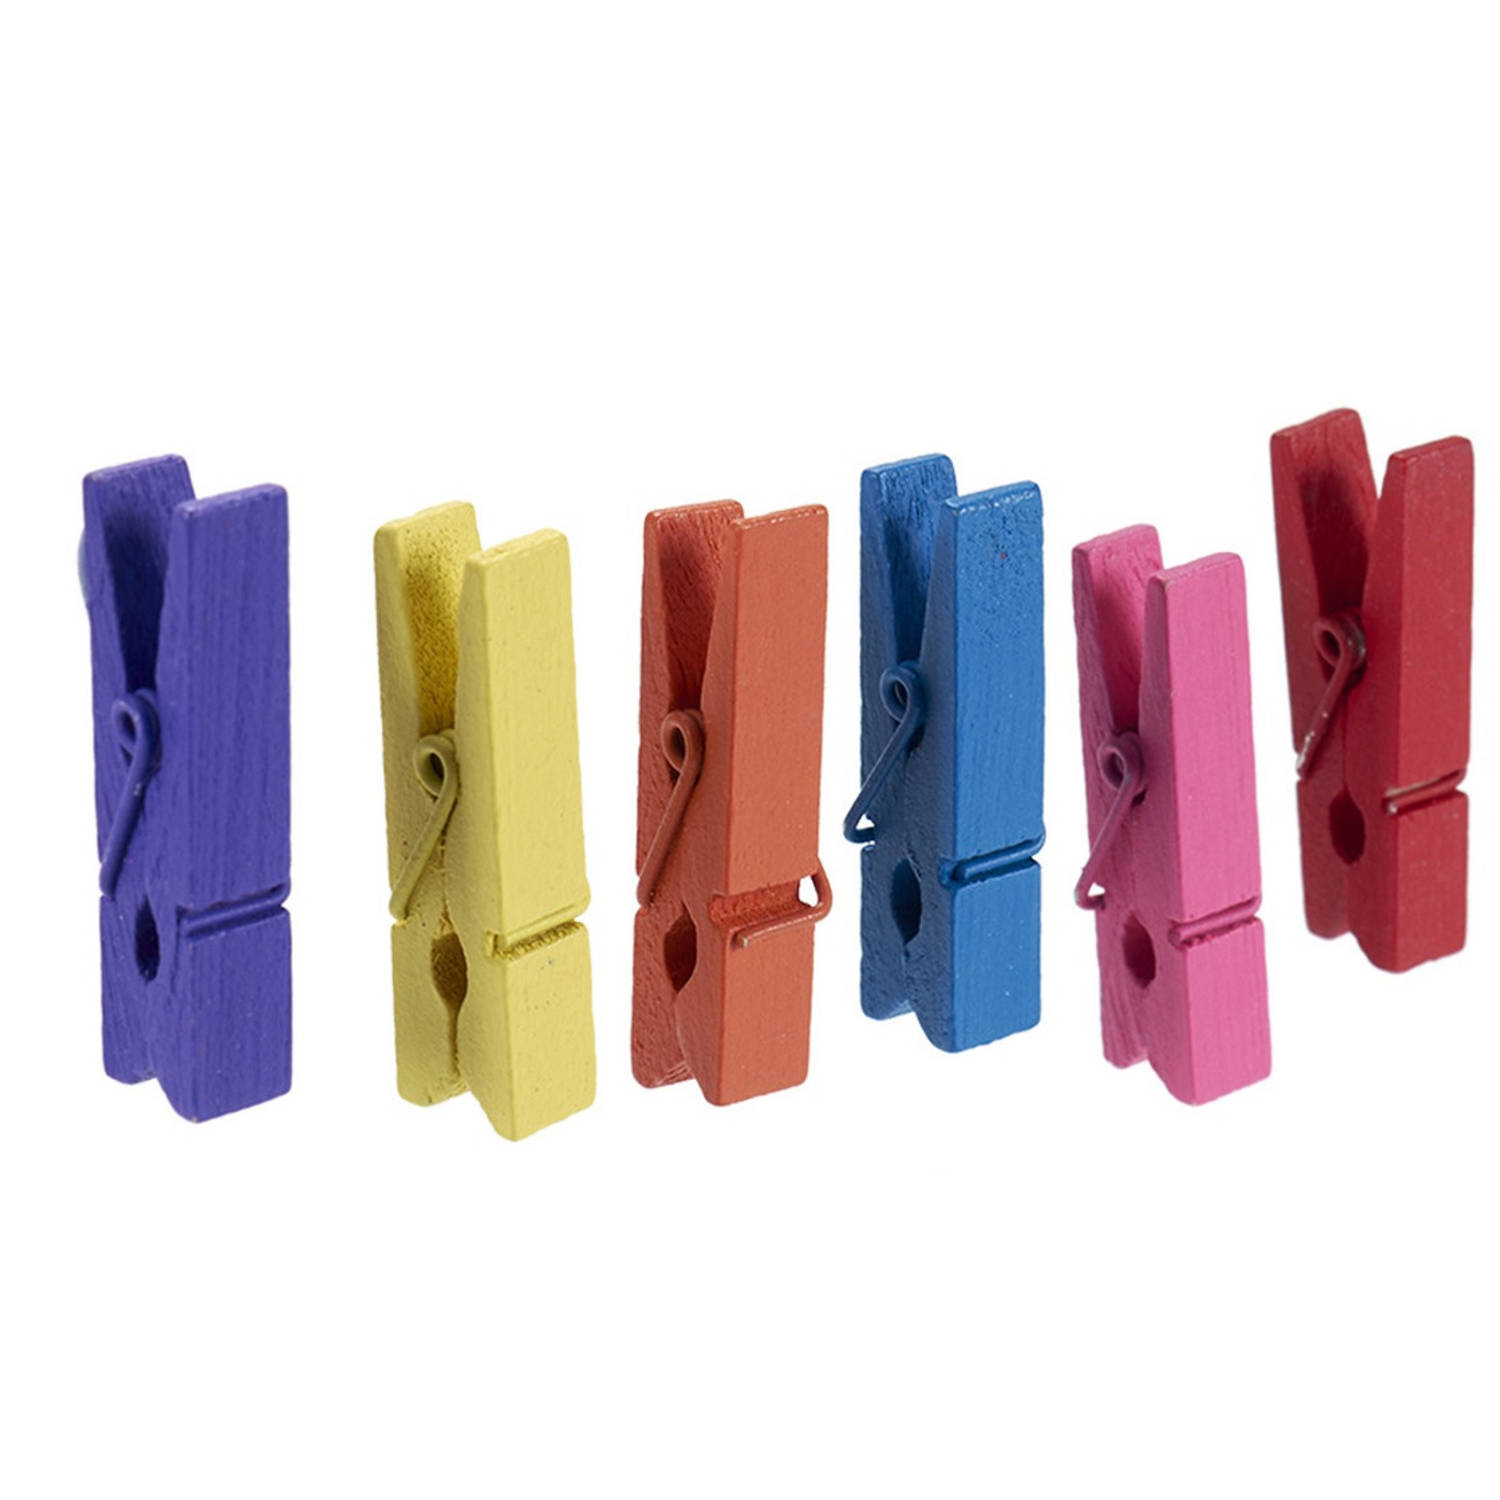 35x stuks multi-color houten kleur hobby mini knijpers/knijpertjes - Houten knutselstokjes